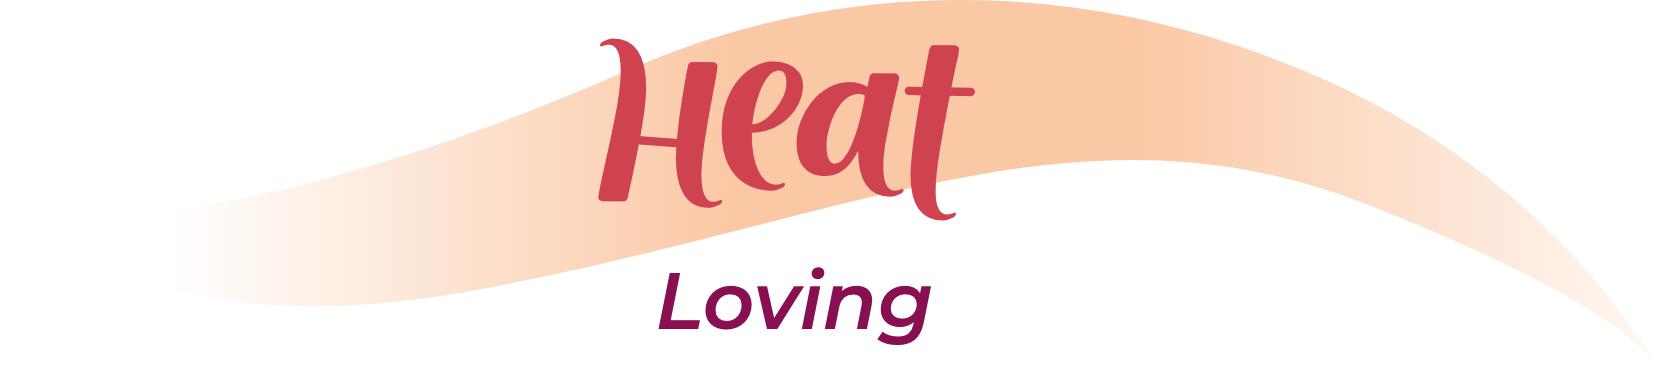 Heat Loving